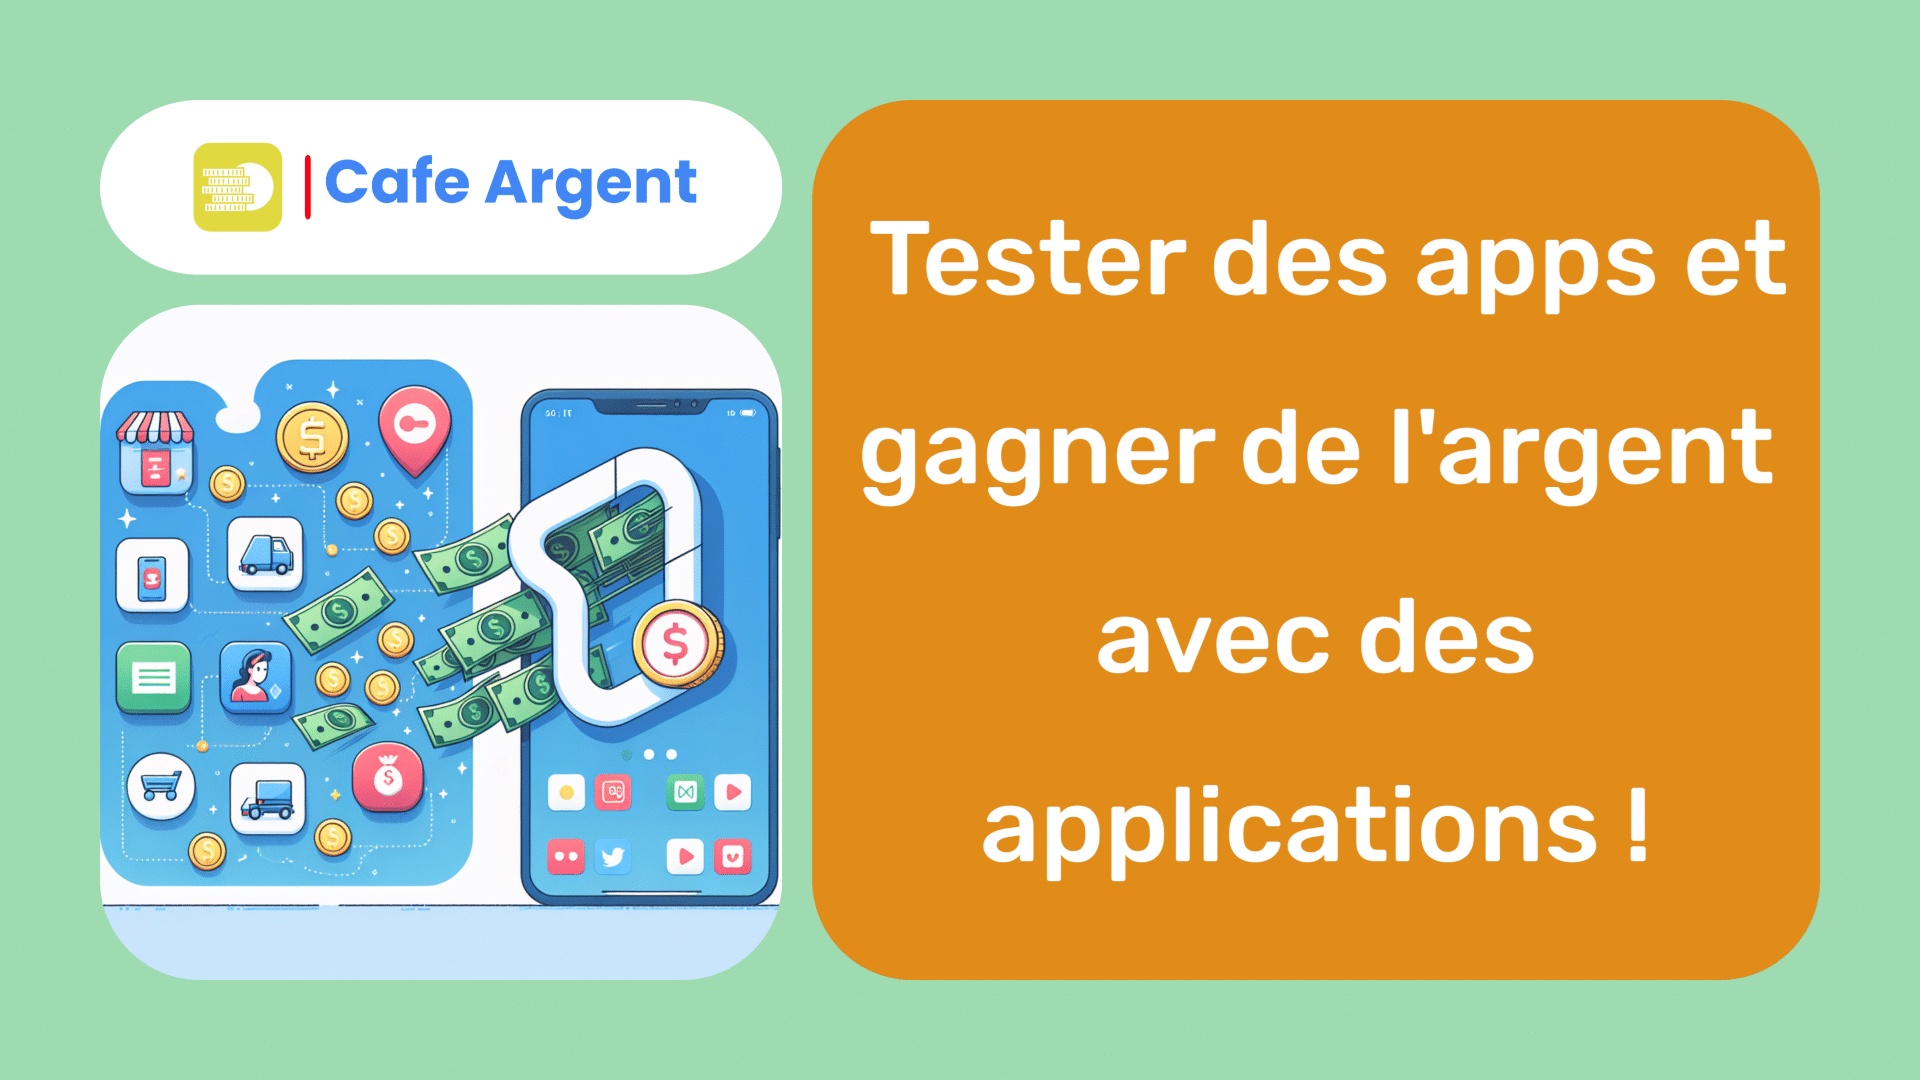 Tester des apps et gagner de l'argent avec des applications !